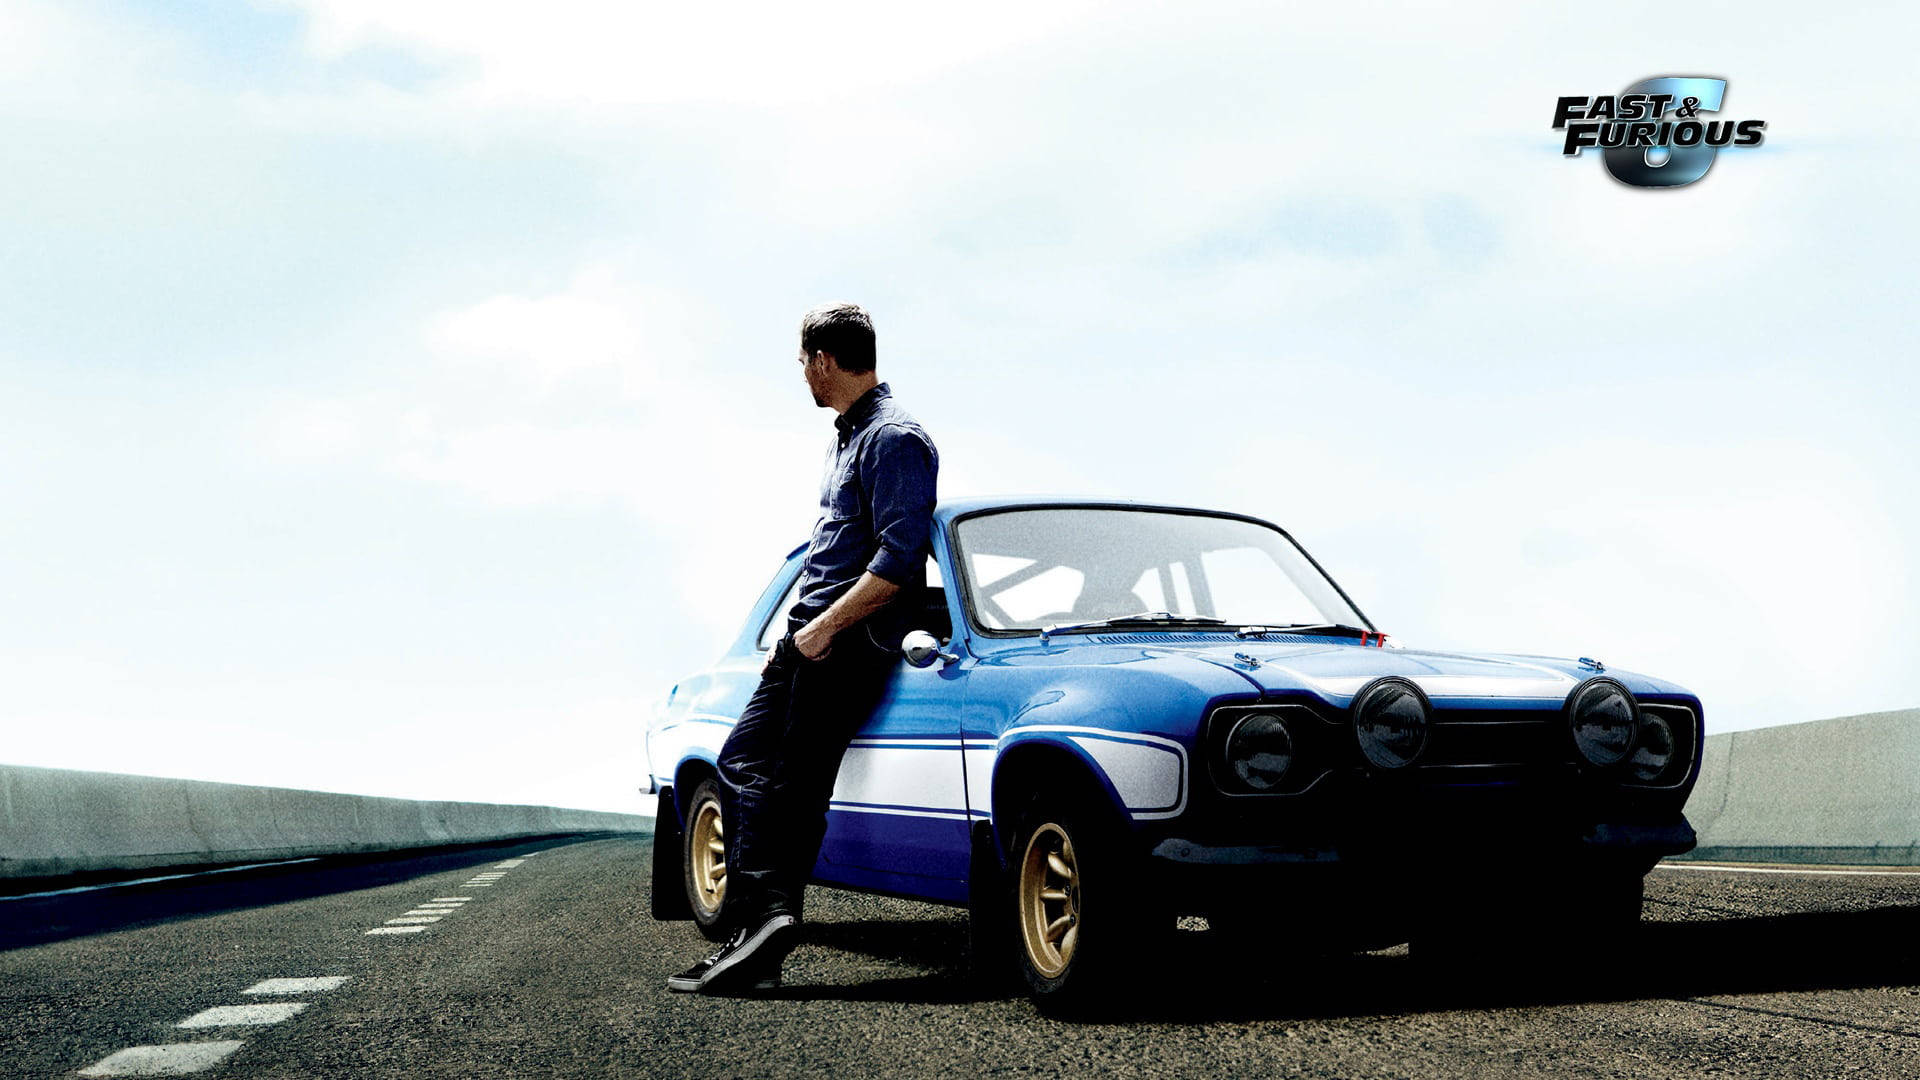 Paul Walker Leaning On A Blue Car Background